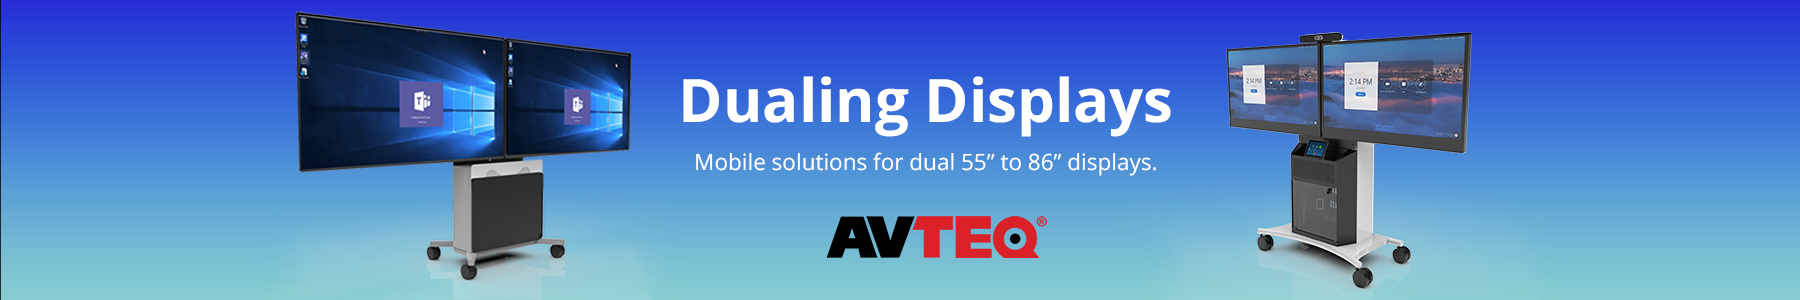 avteq_dualing_displays_banner